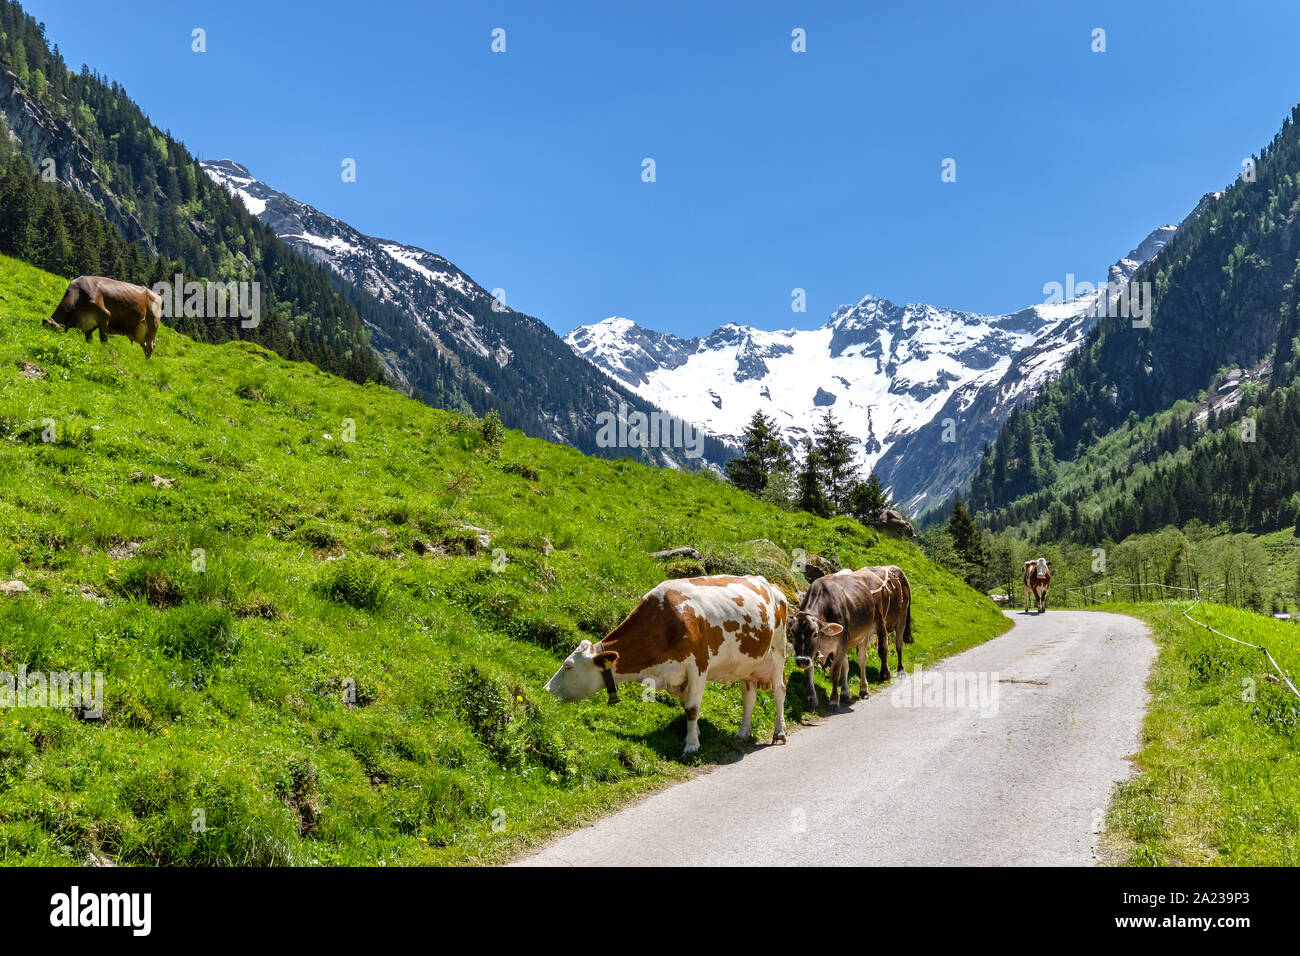 Cows grazing - alpine mountain landscape Stock Photo